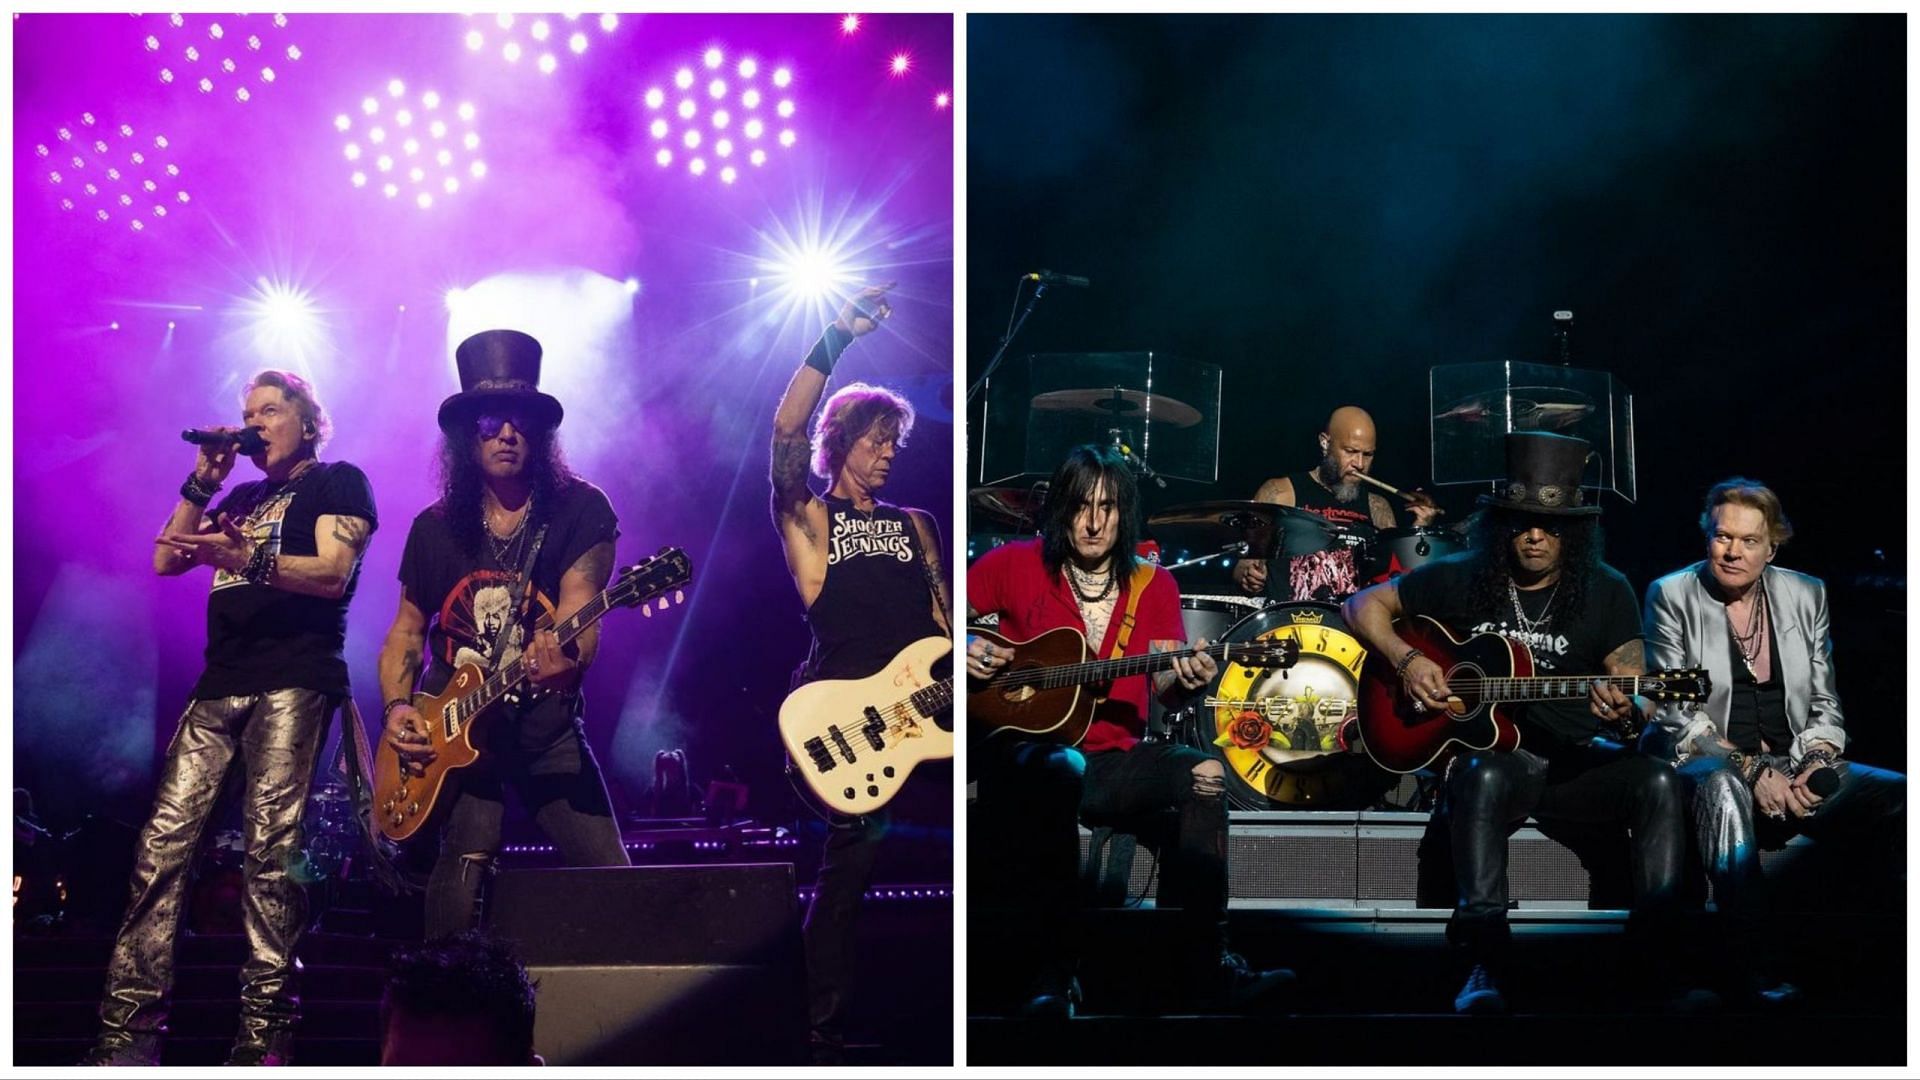 Two portraits of Guns N Roses (Images via official Intagram @gunsnroses)